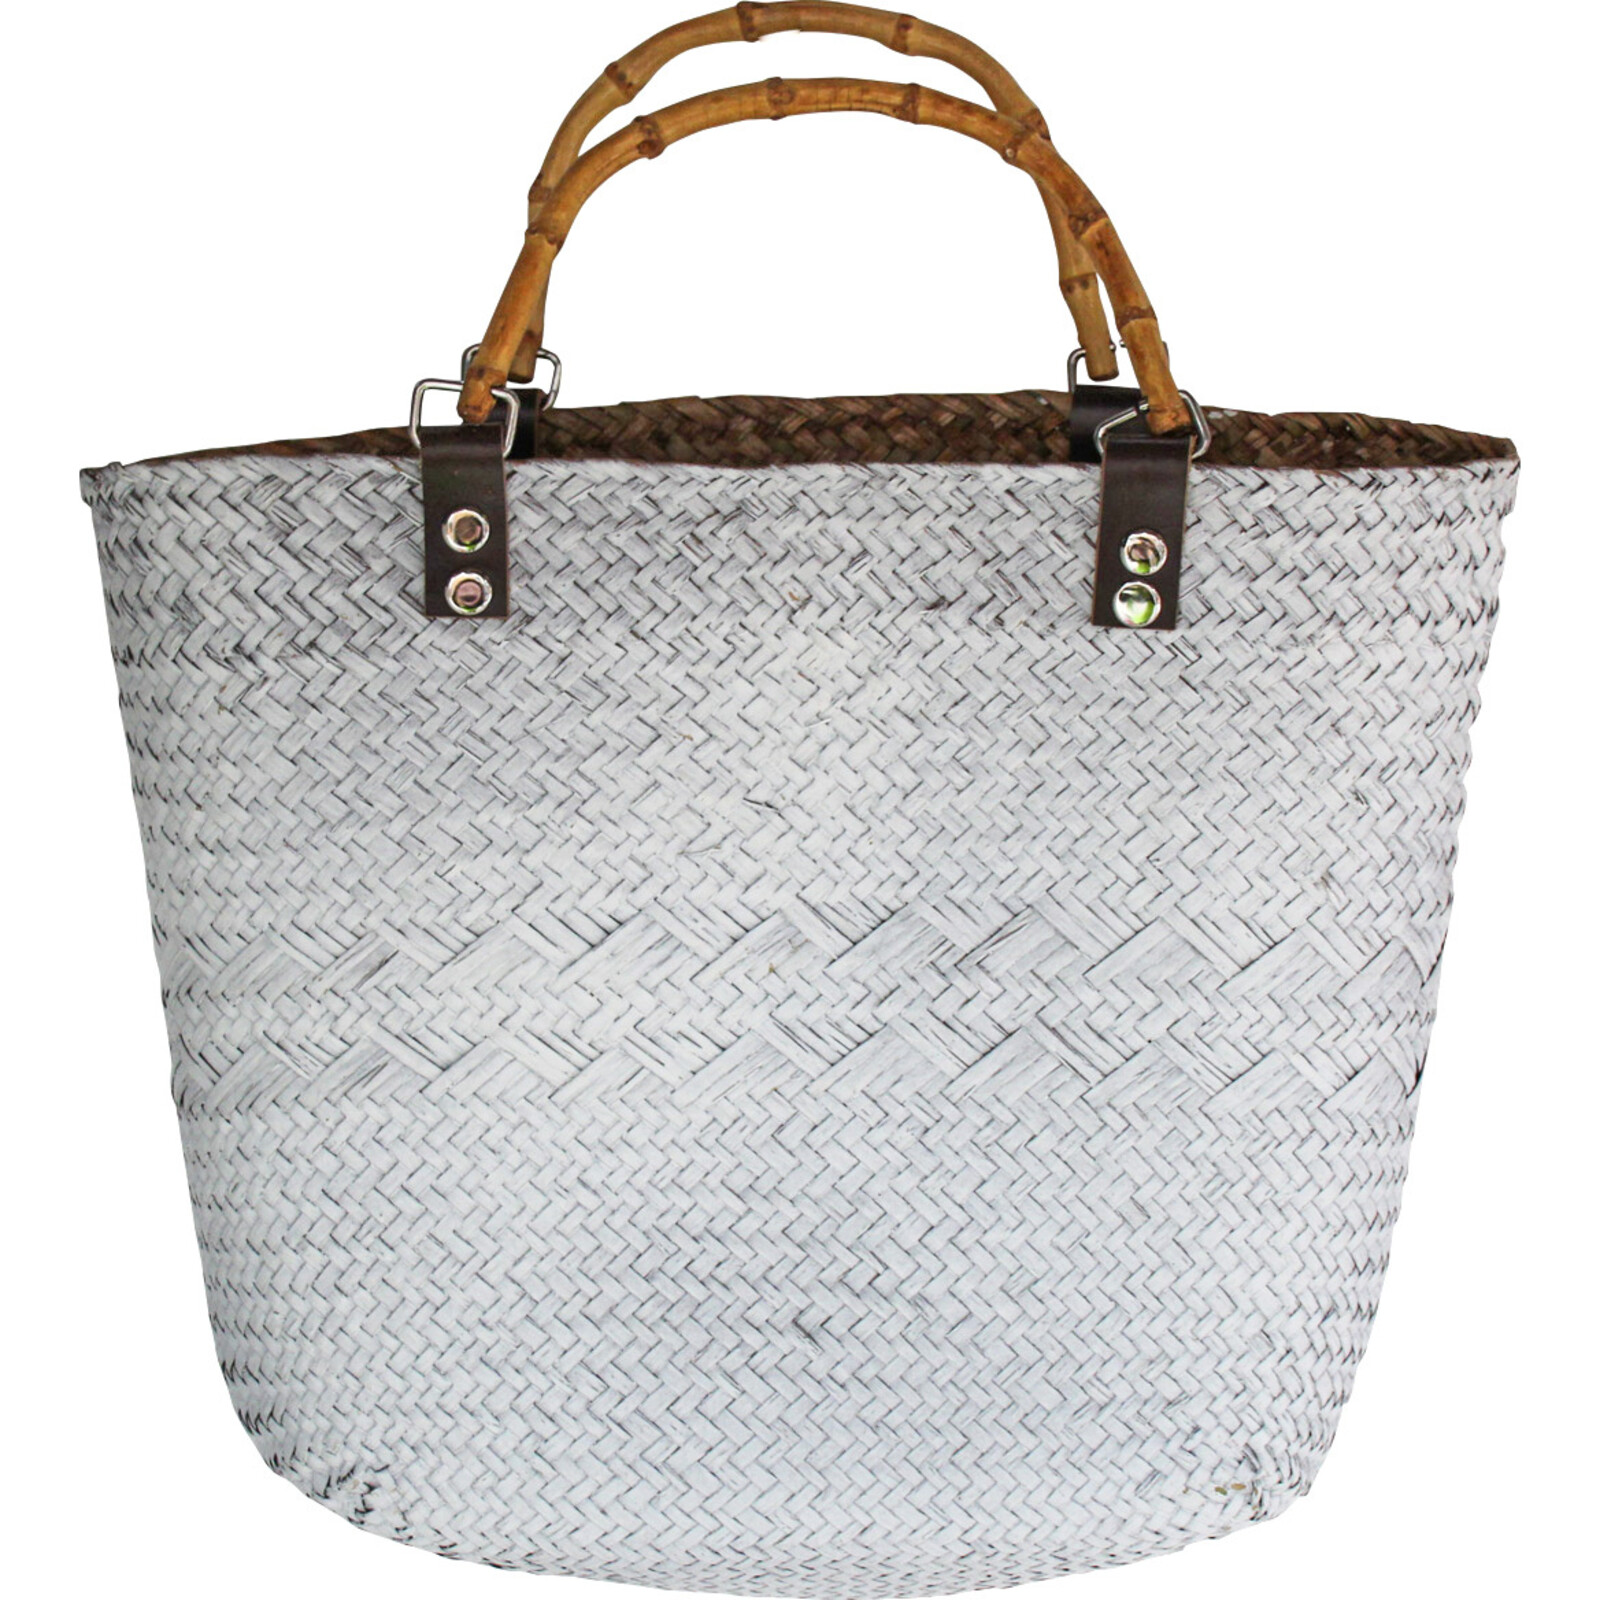 Woven Bag White/Bamboo Handle